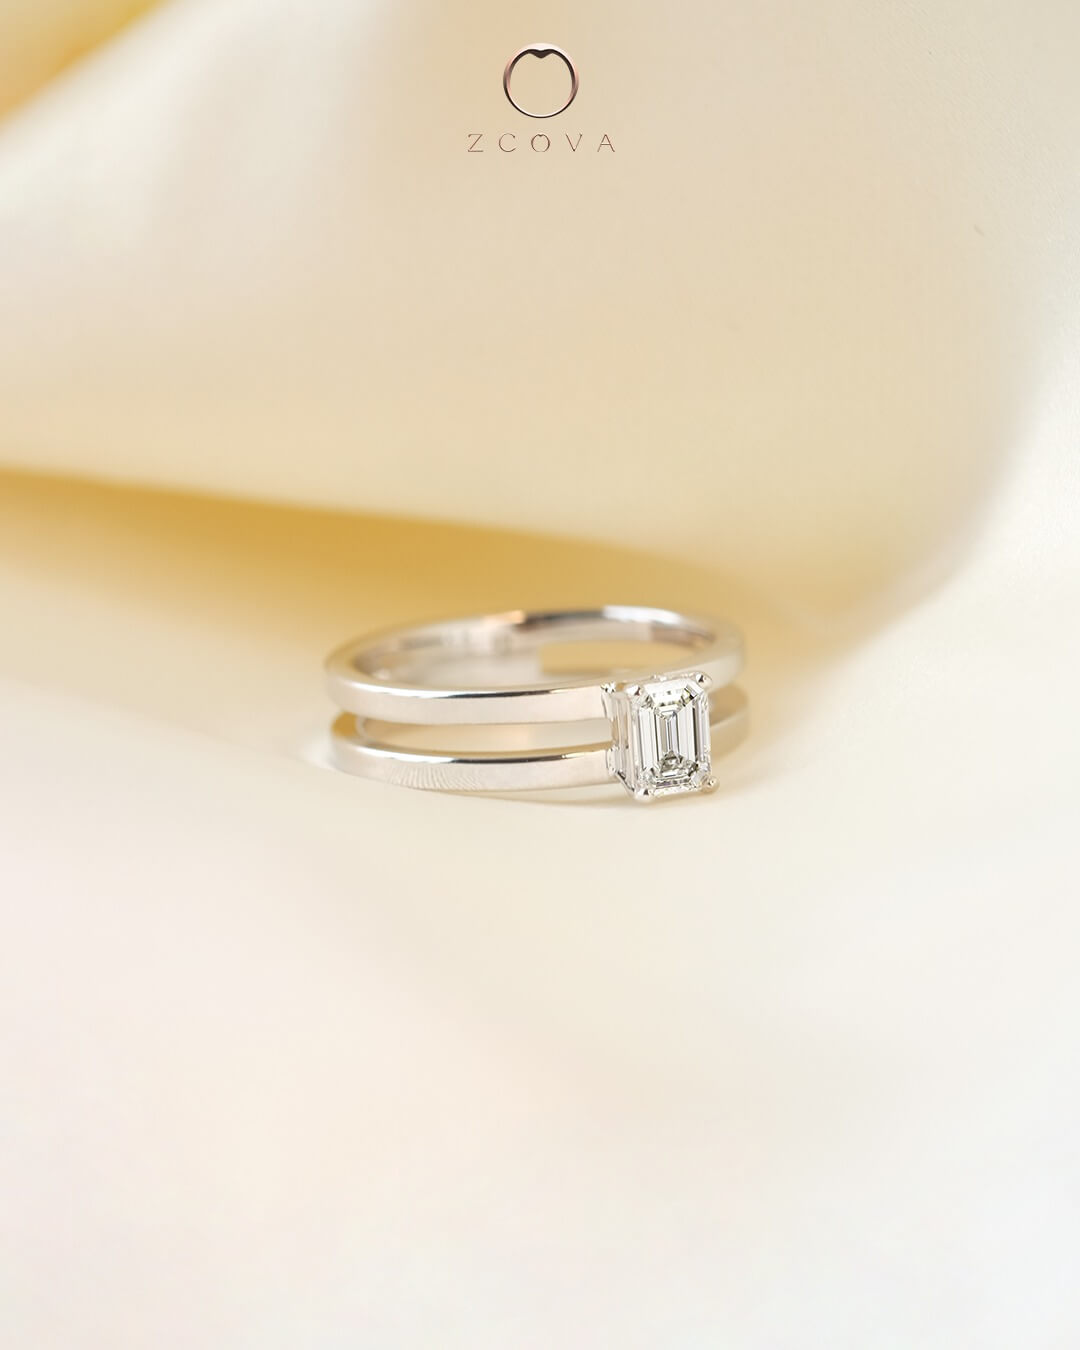 emerald shaped diamond with split shank engagement ring setting